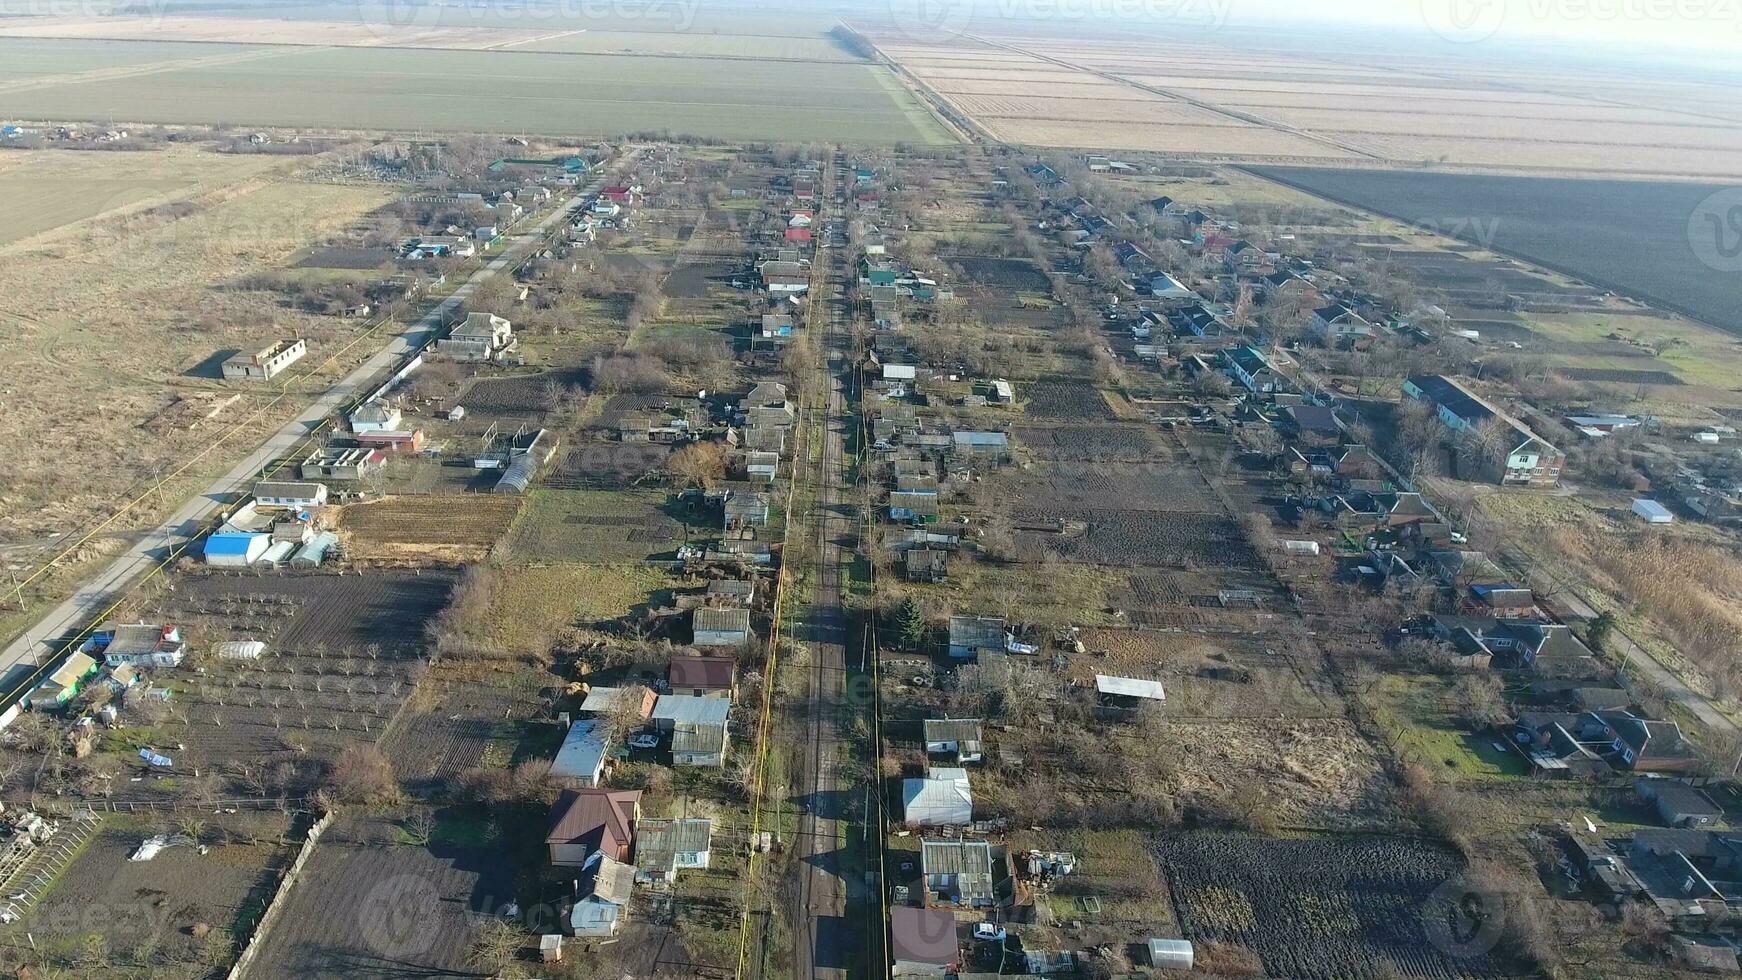 Village Elitnyy Krasnoarmeyskiy District, Krasnodar Krai, Russia. Flying at an altitude of 100 meters. The ruin and oblivion photo